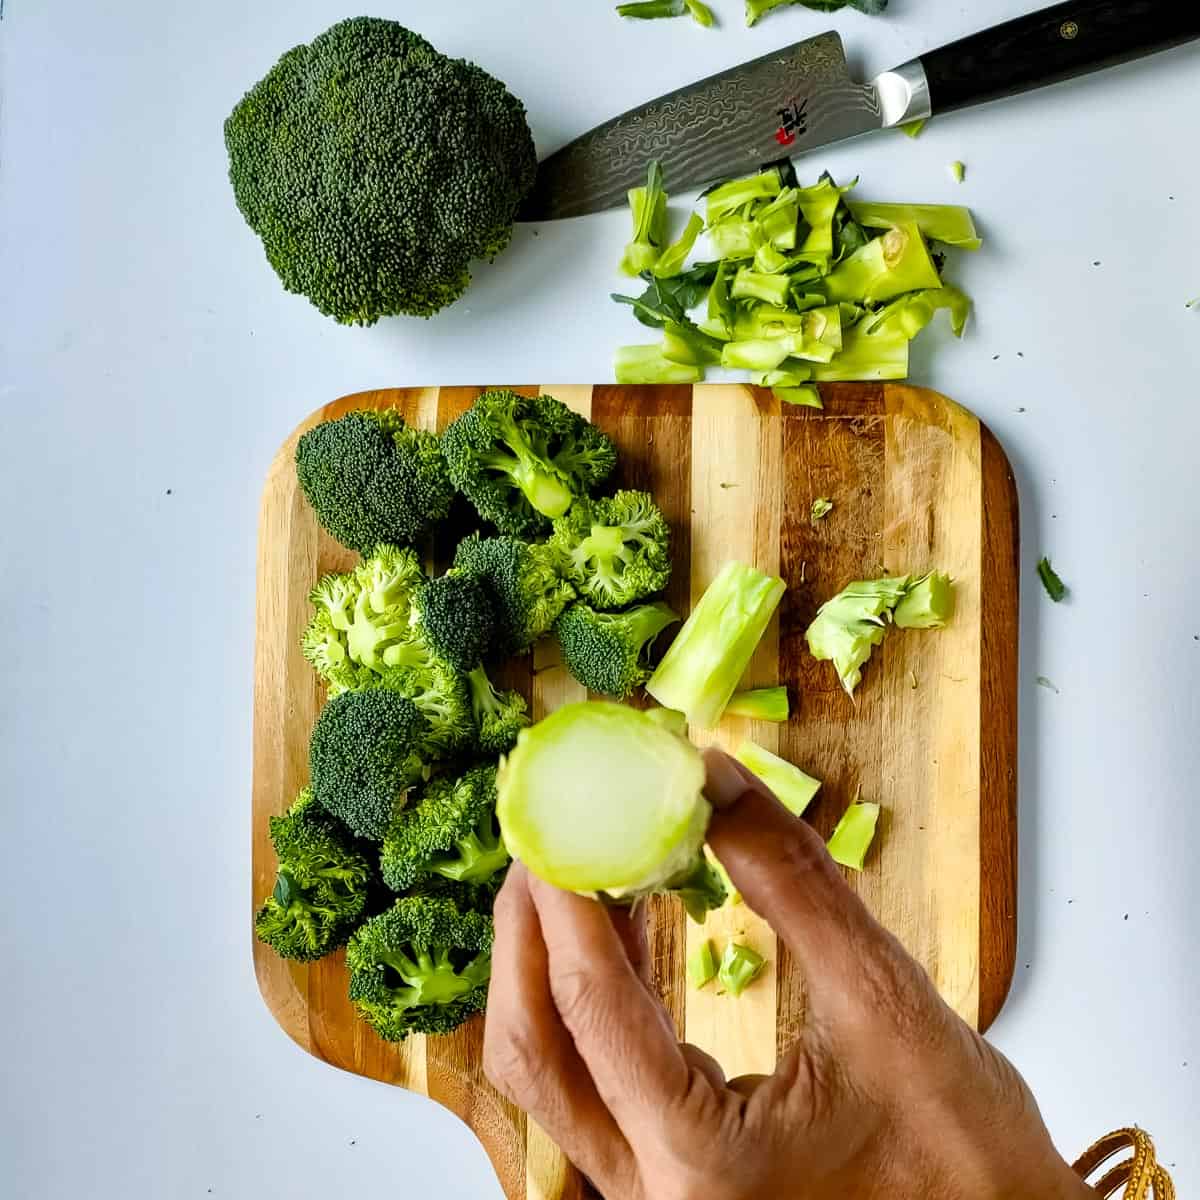 peeled broccoli stems and chopped florets for roasted potato and broccoli recipe.